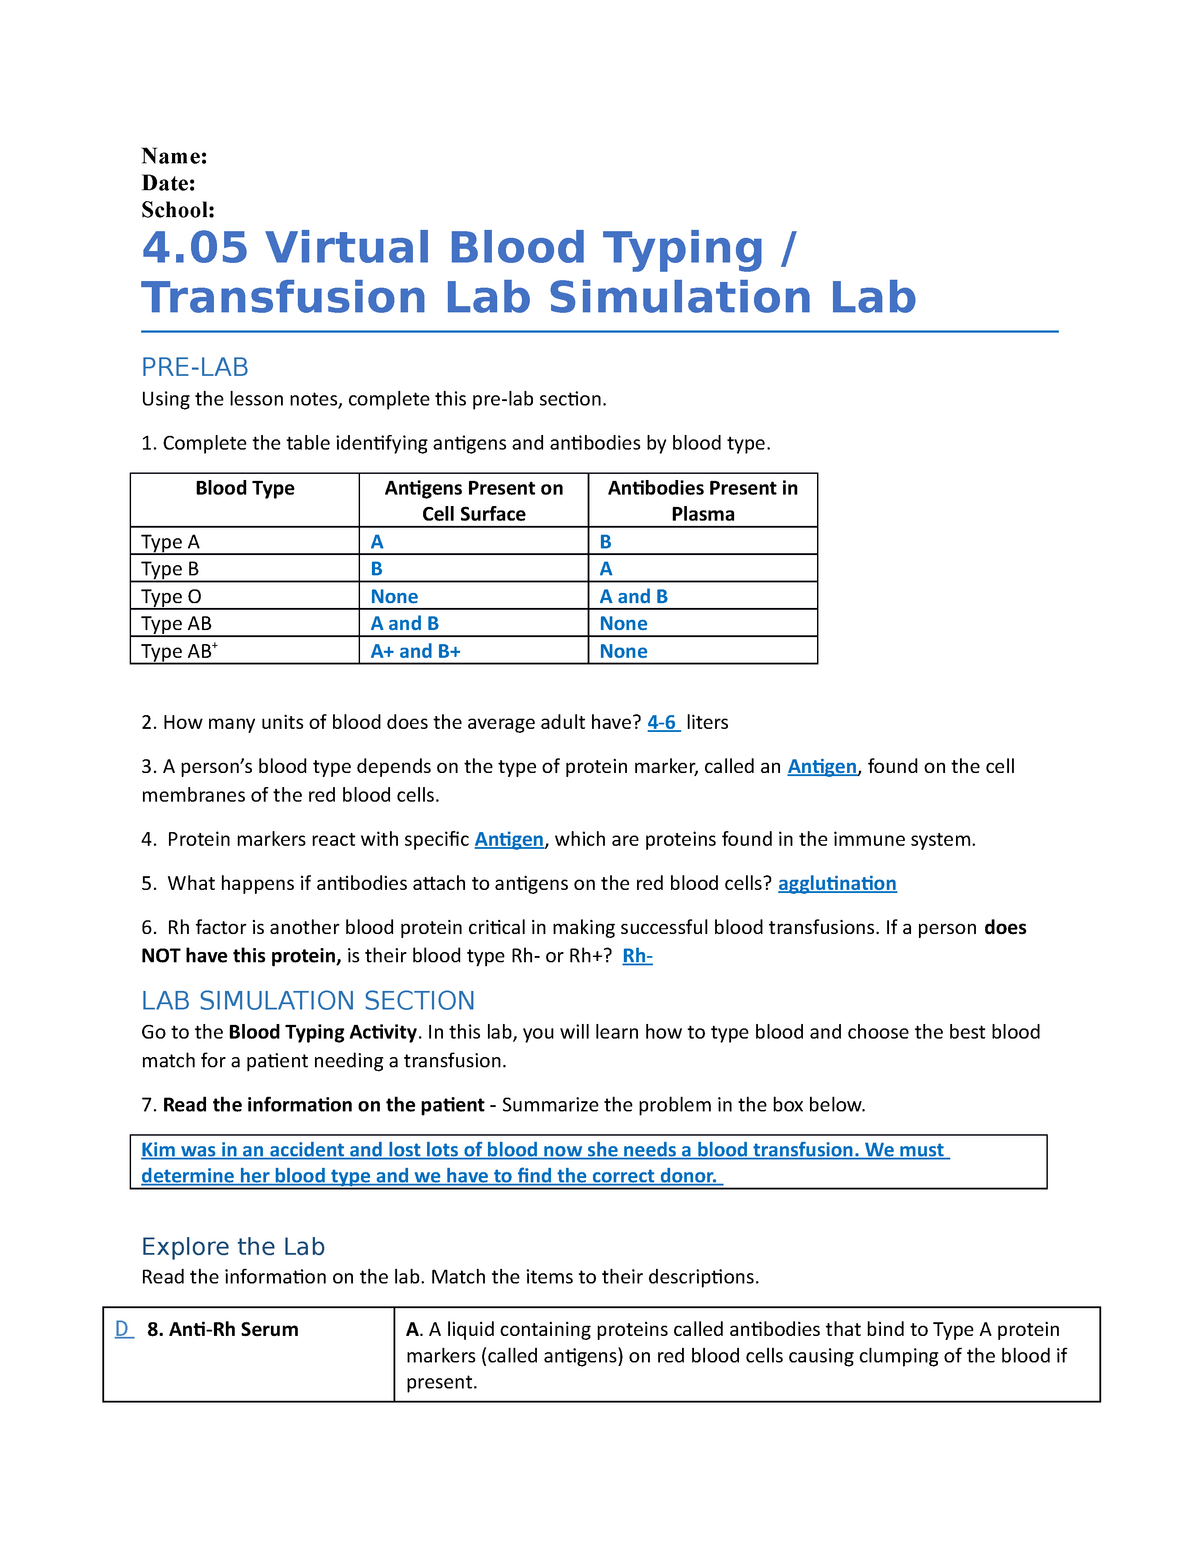 blood-typing-pre-lab-work-sheet-chapter-name-date-school-4-virtual-blood-typing